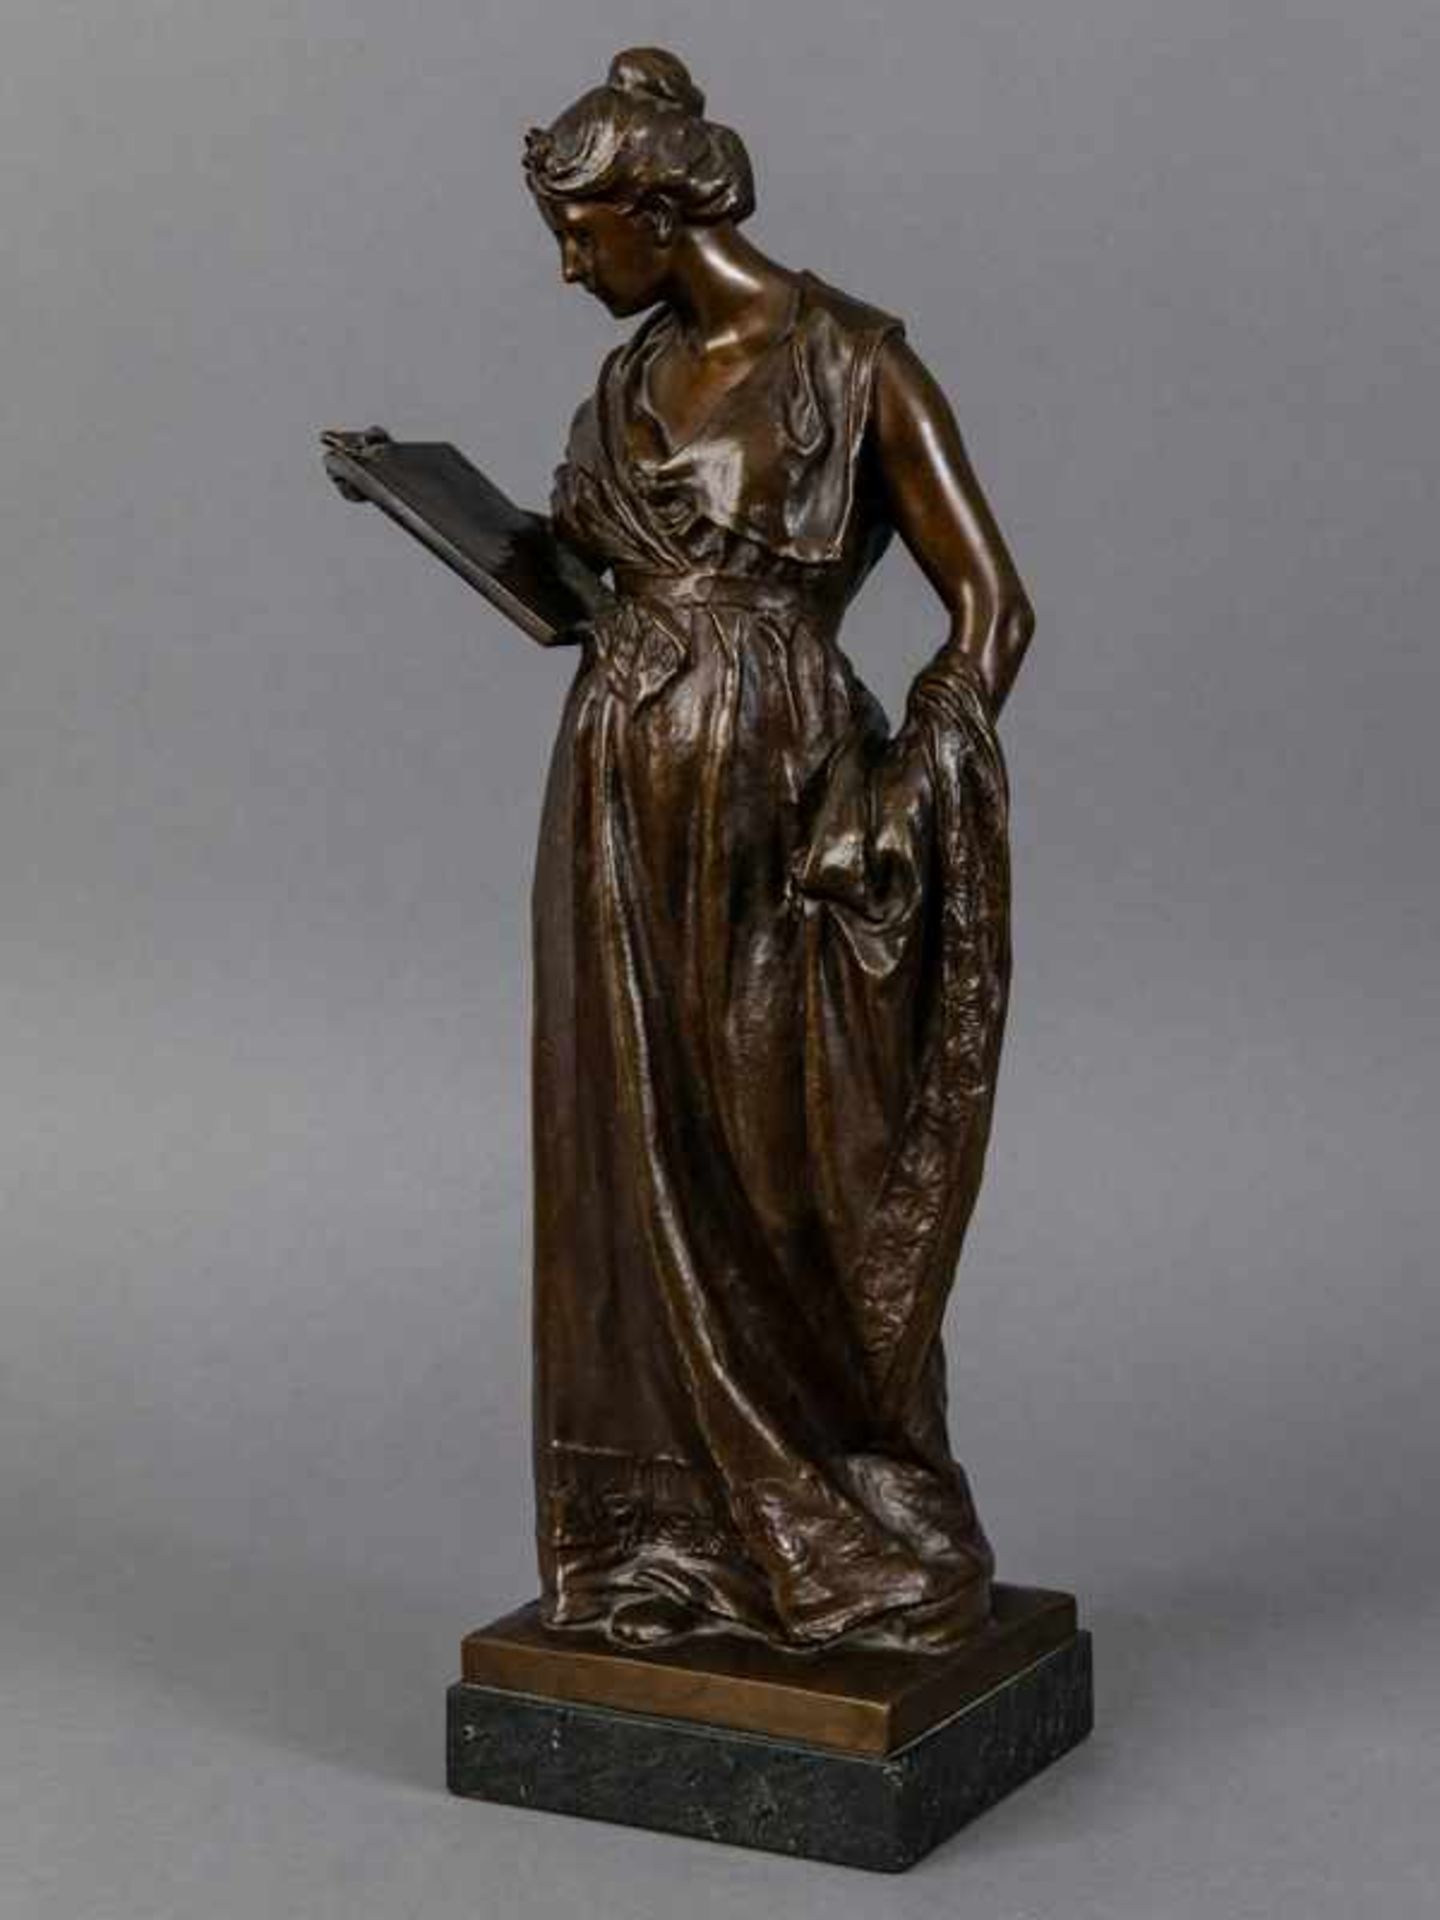 Figurenplastik "Stehende Frau mit Tafel", sign. "E. Müller", H. Noack, (Berlin-)Friedenau, um 1900. - Bild 2 aus 11